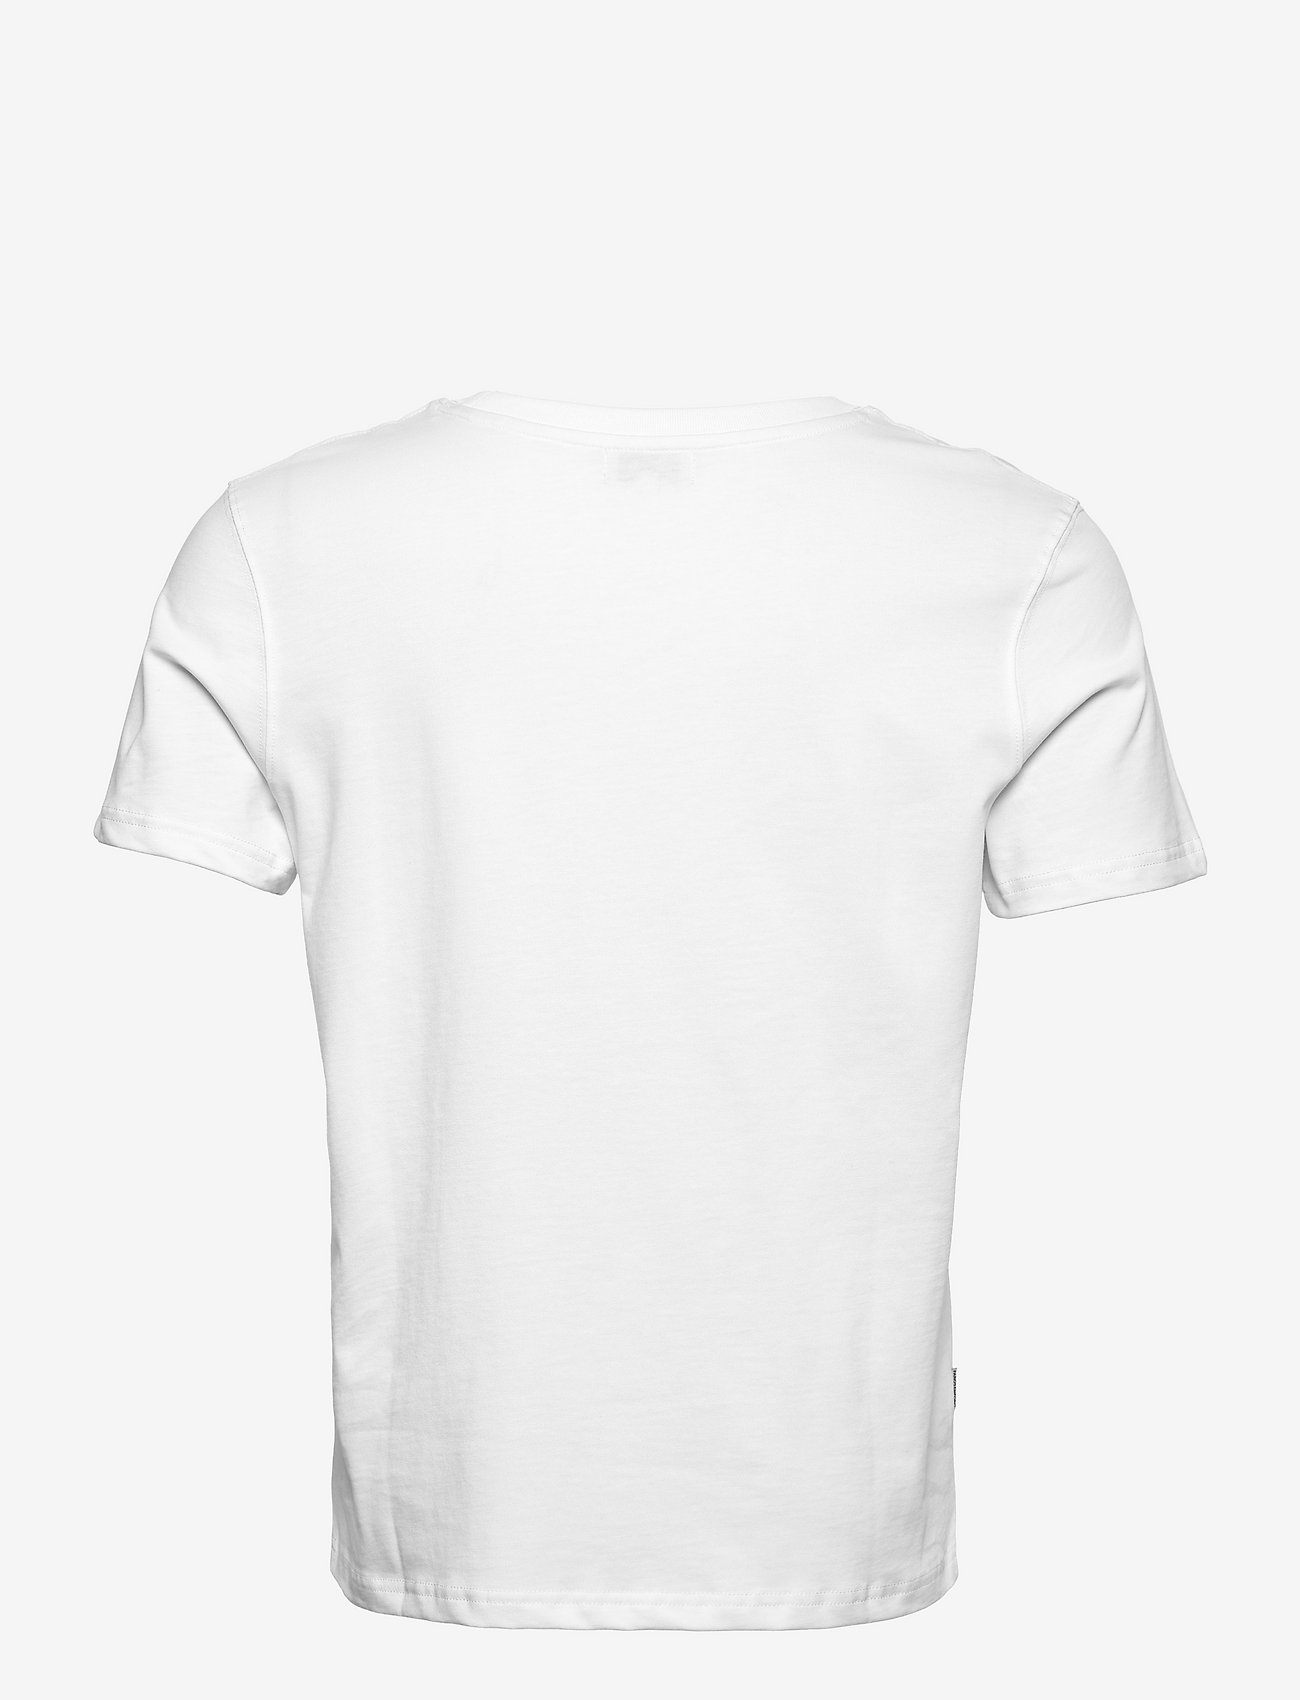 Panos Emporio - PANOS EMPORIO ELEMENT LOVE TEE - t-shirts - white - 1